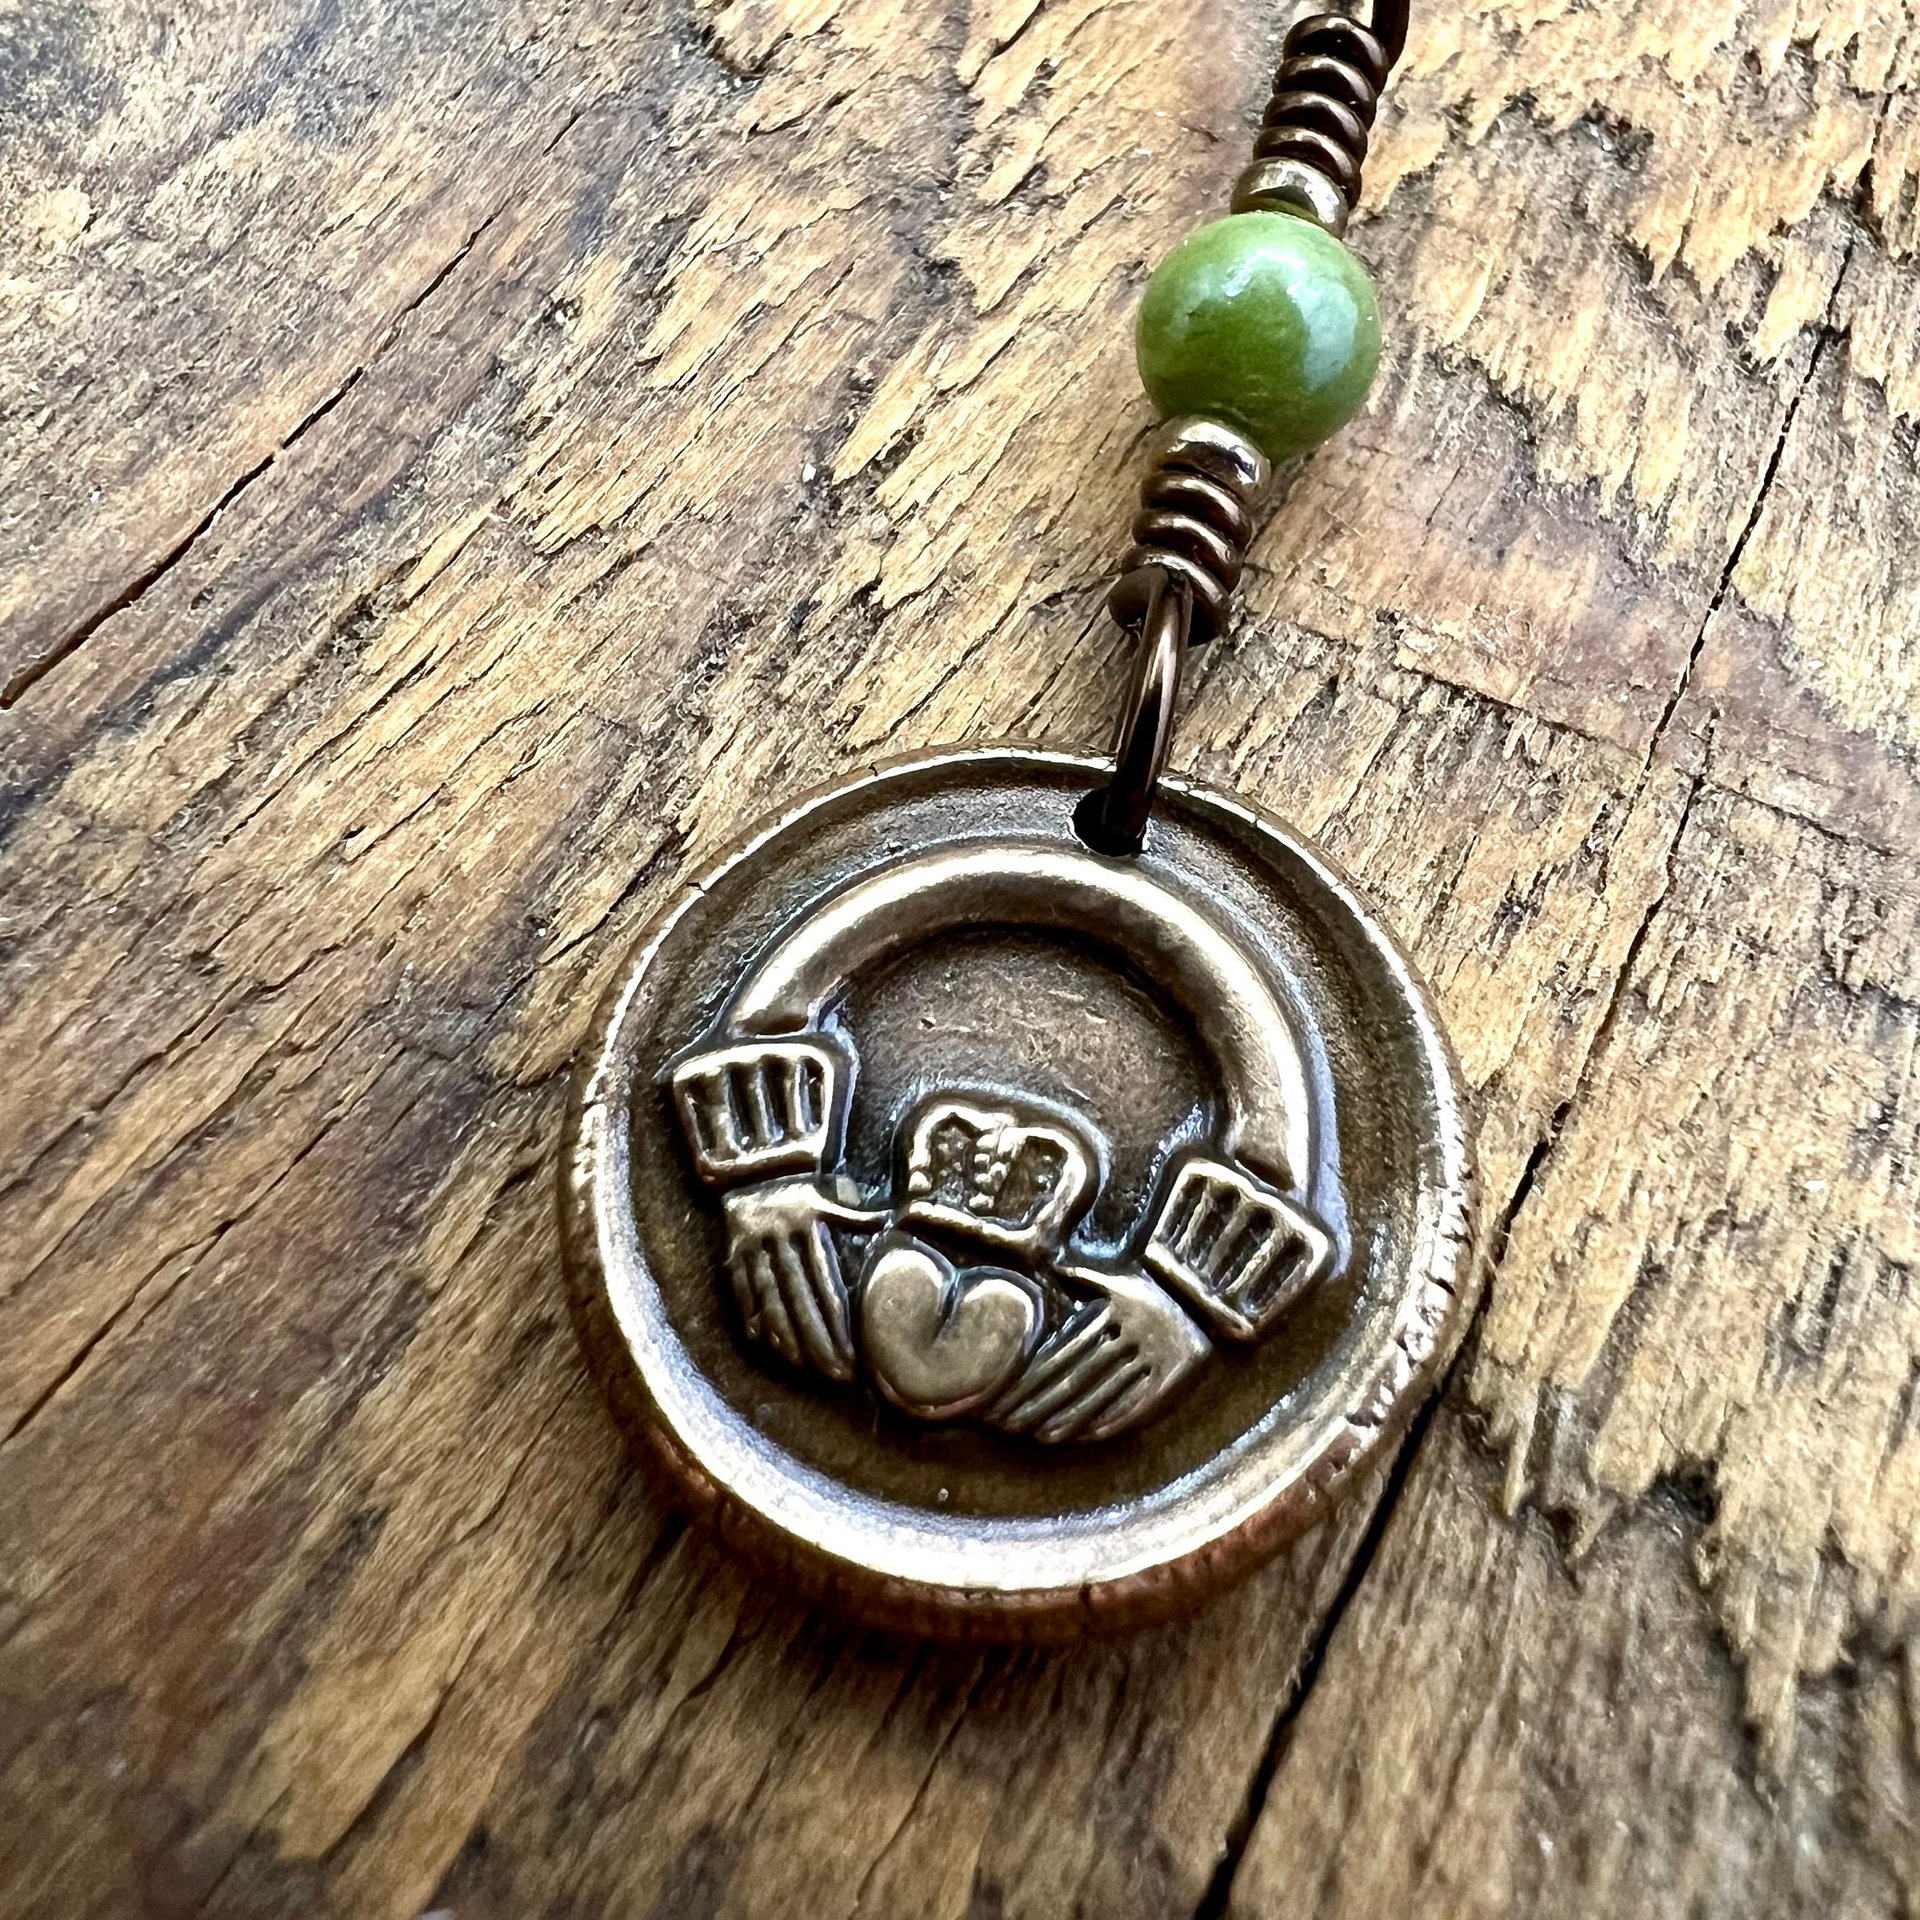 Bronze Claddagh Charm, Wax Seal Charm, Connemara Marble, Irish Celtic Jewelry, Pagan, 8th Anniversary, Love, Friendship, Loyalty, Handmade